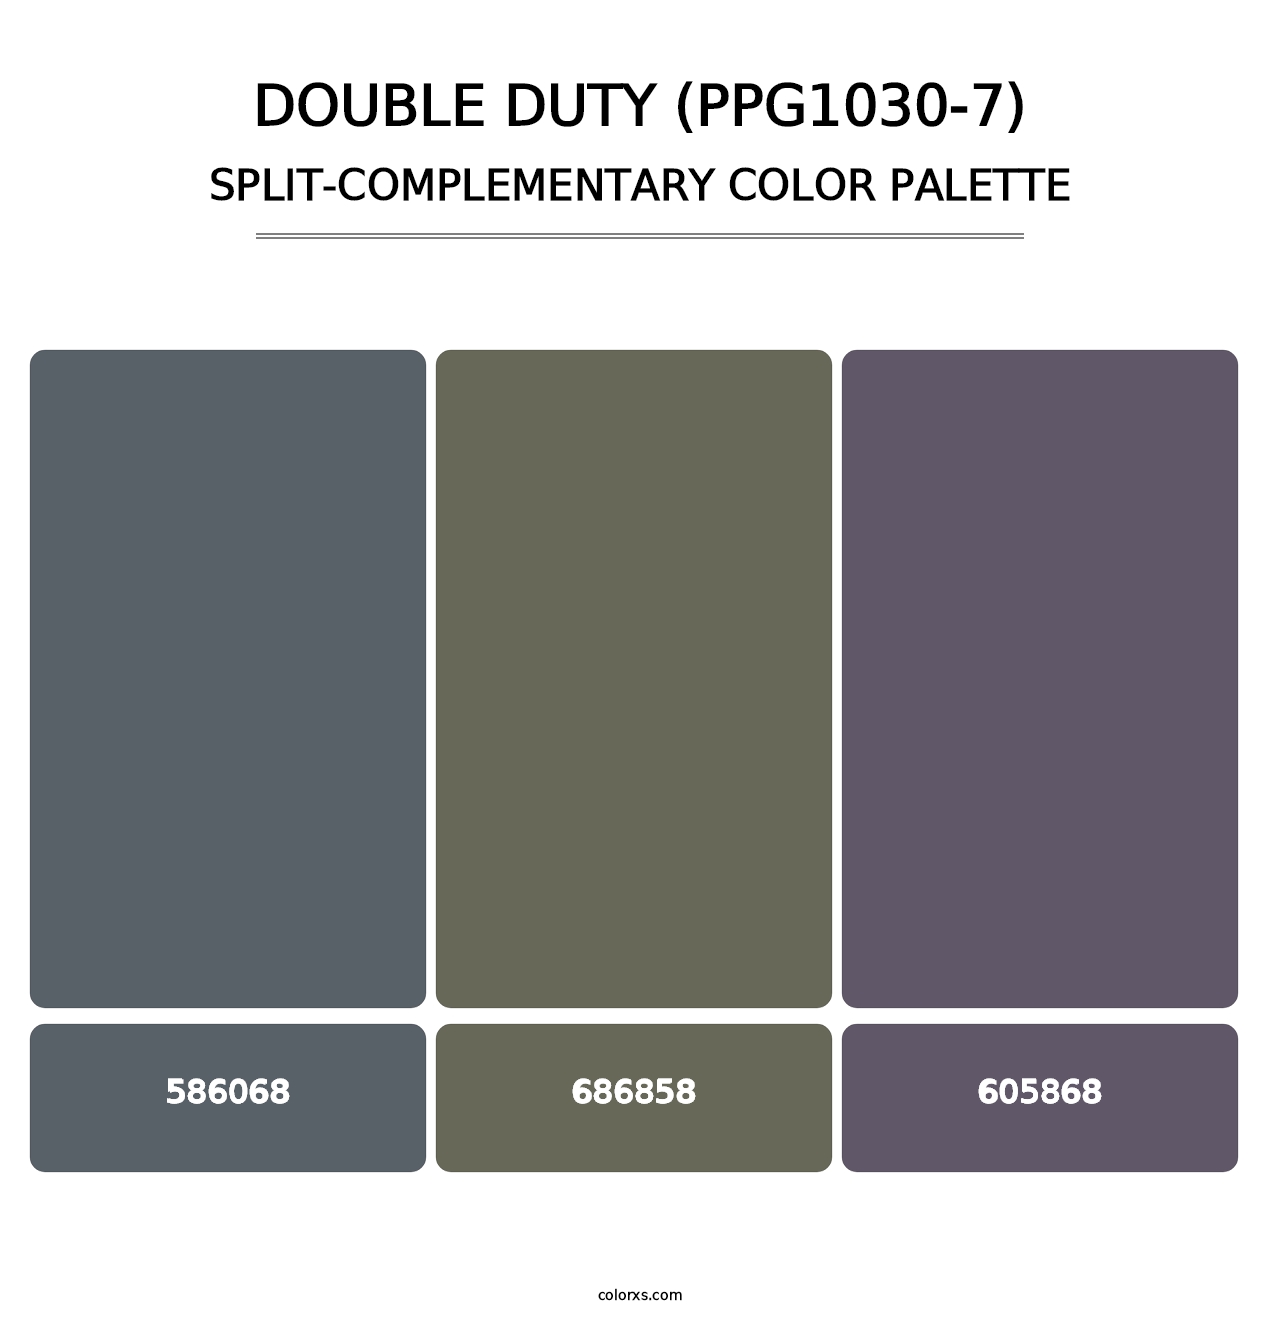 Double Duty (PPG1030-7) - Split-Complementary Color Palette